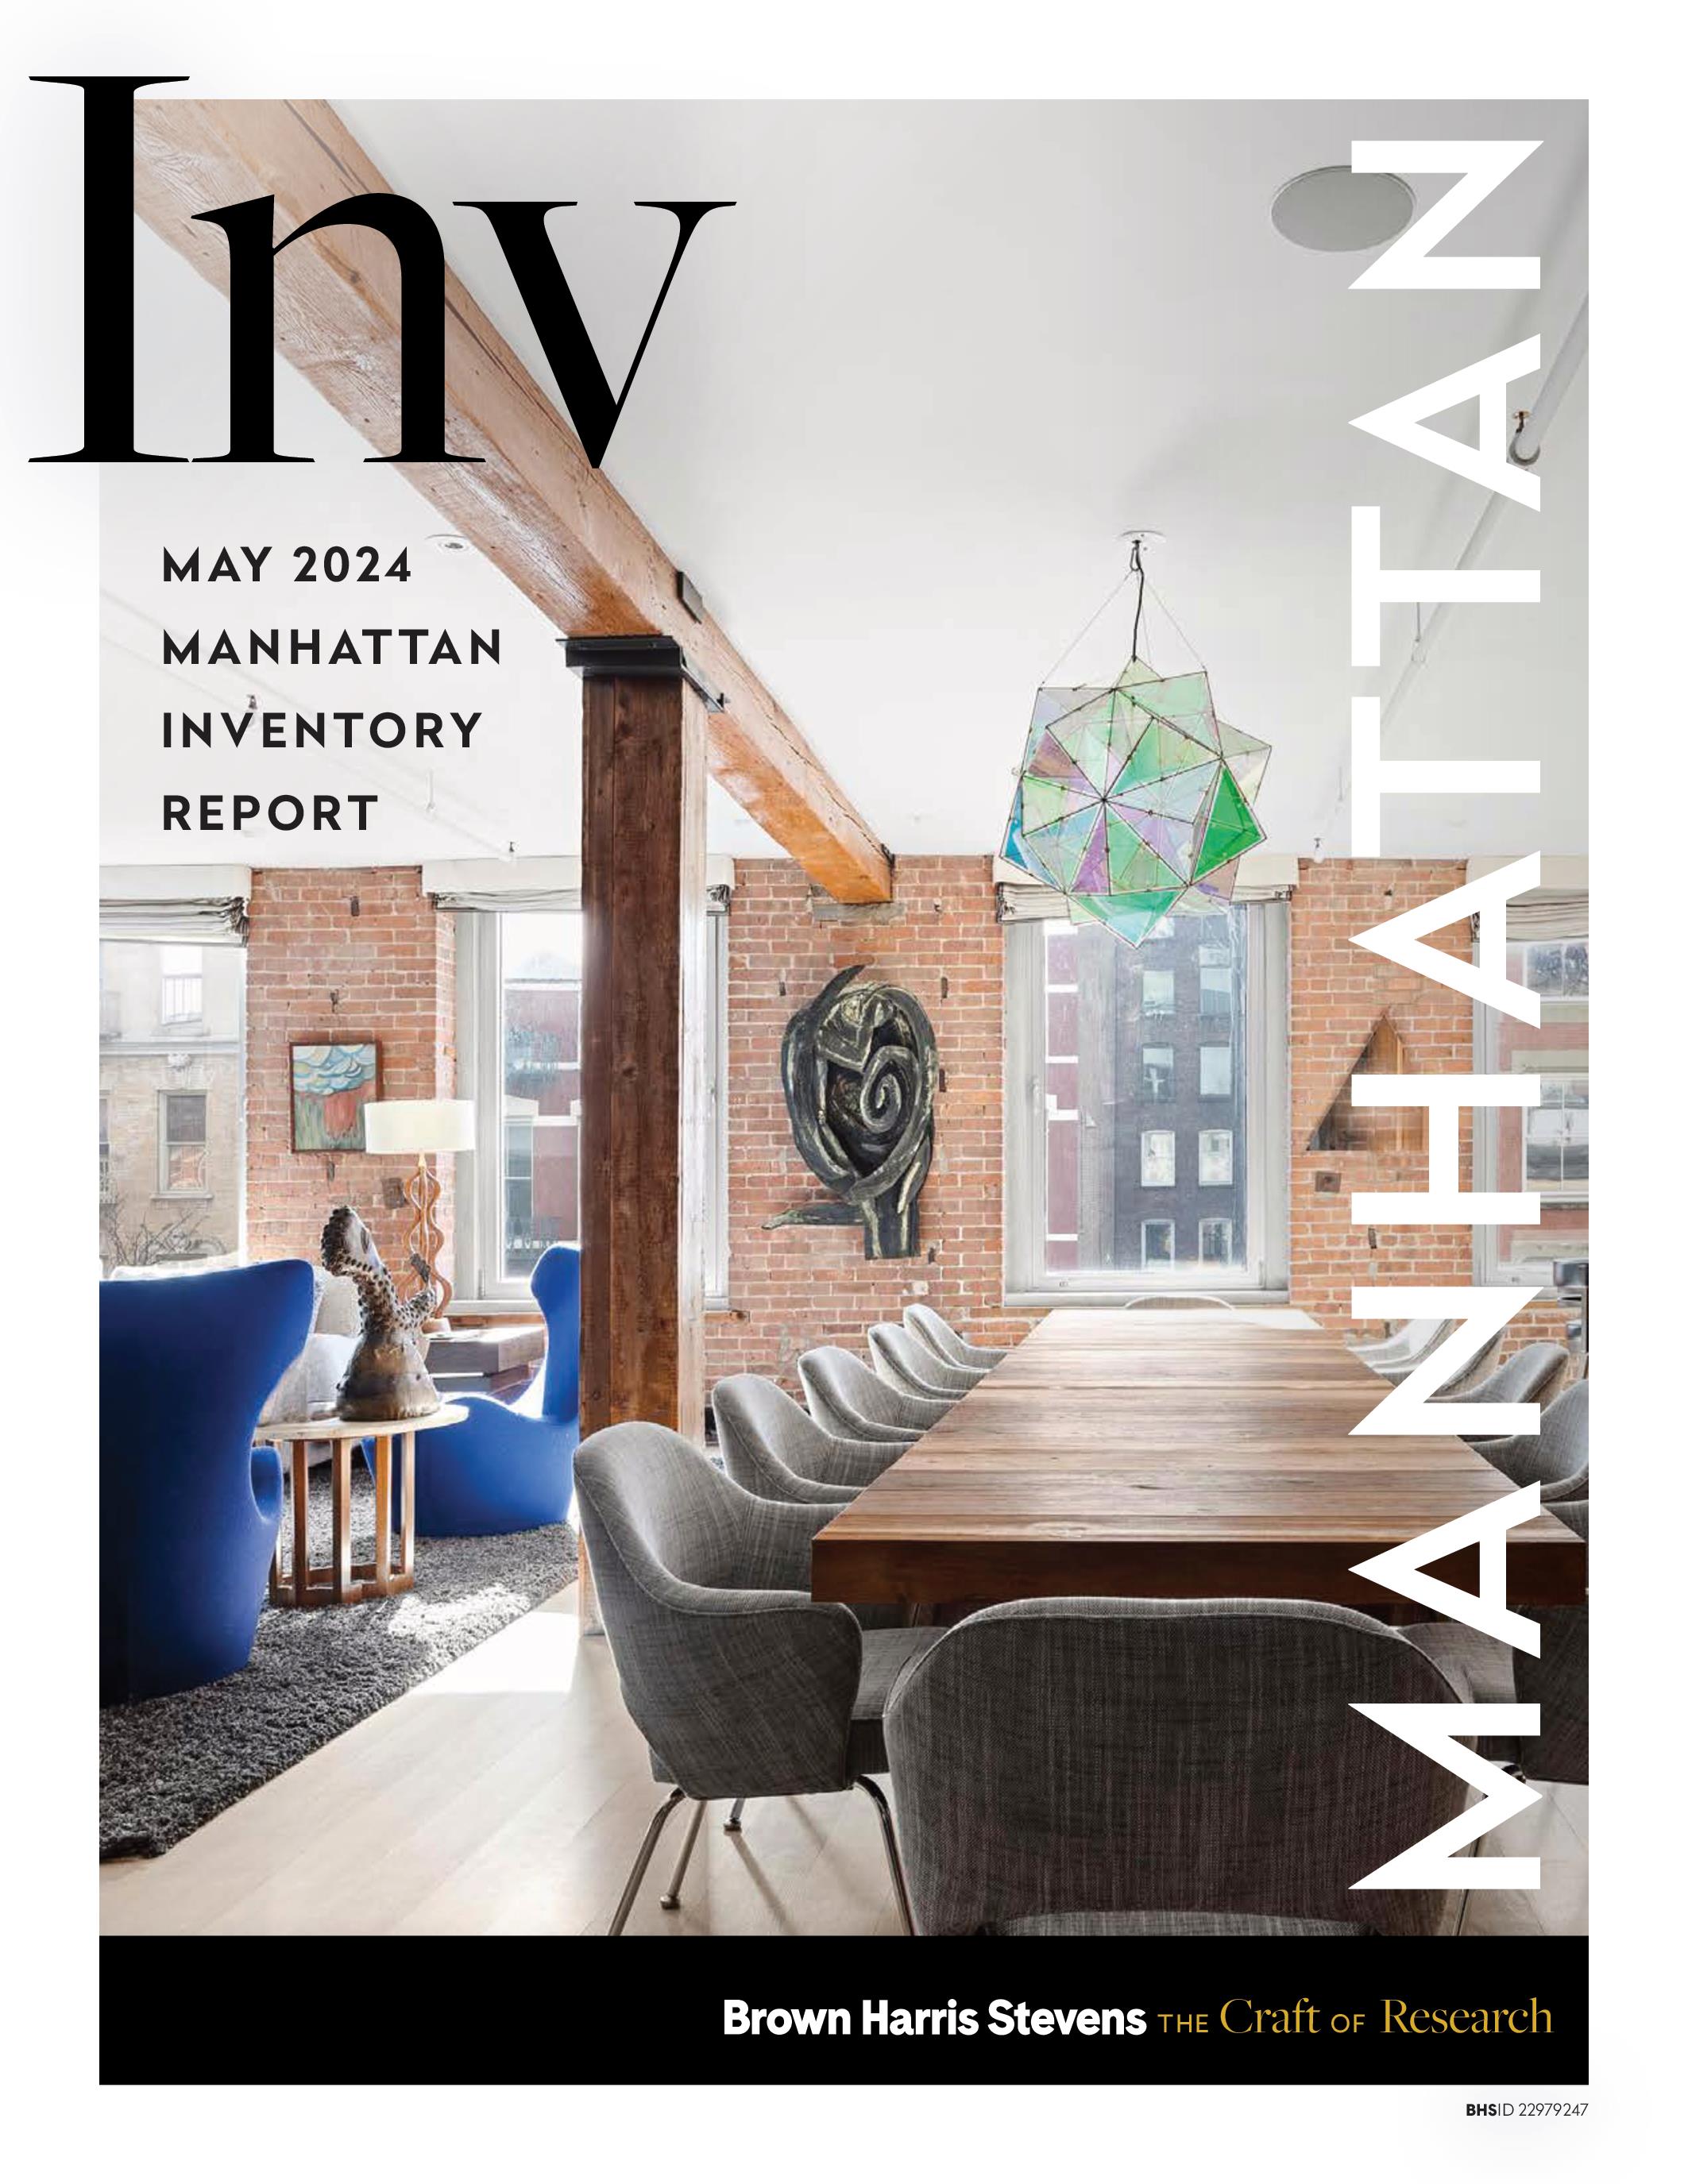 Manhattan Market Report